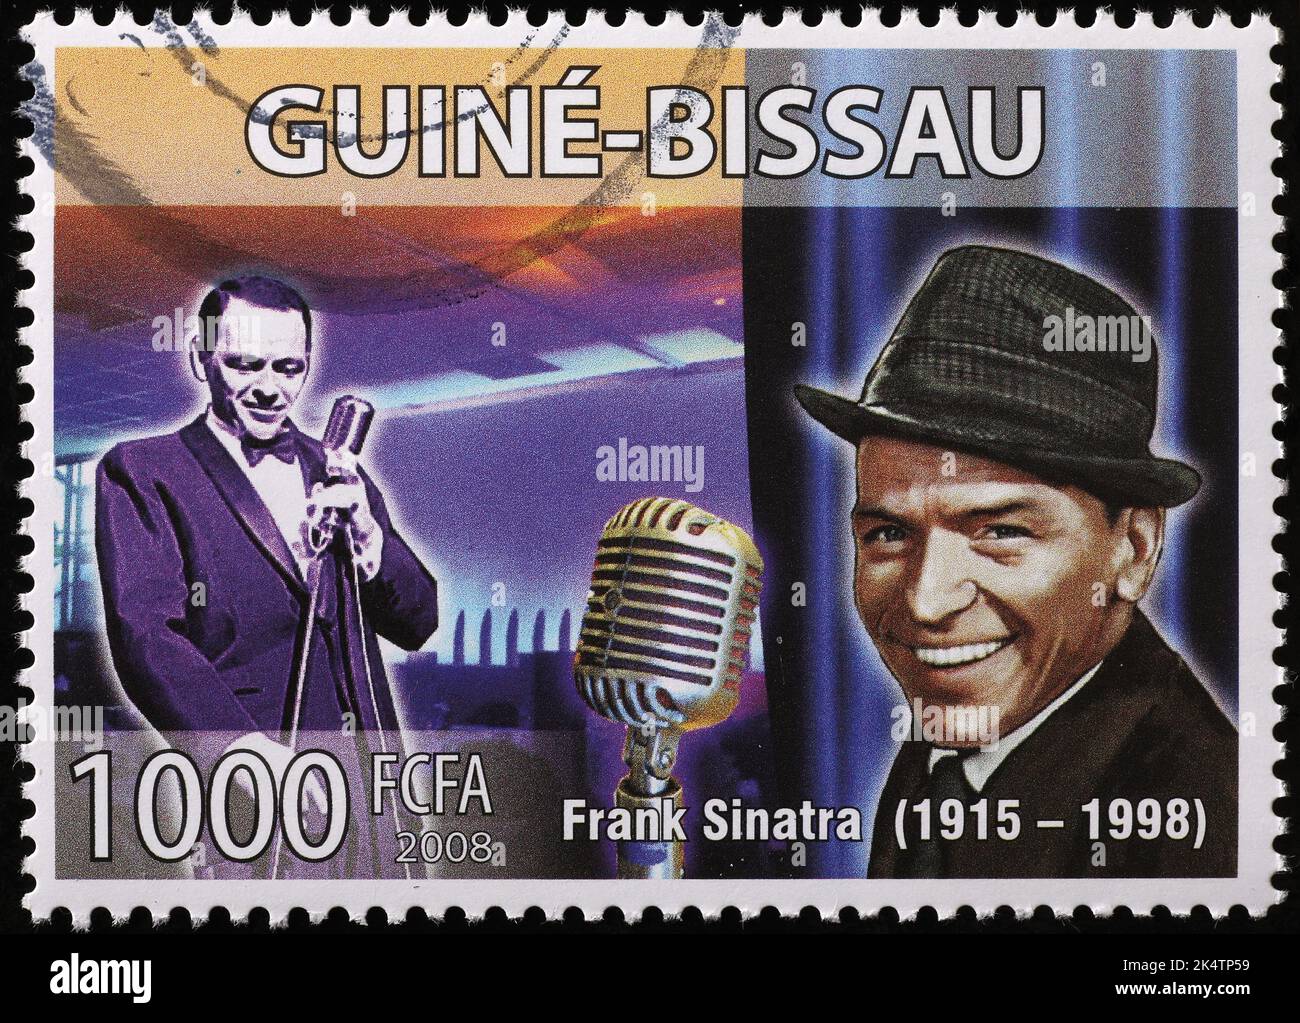 Frank Sinatra en sello postal de Guinea Bissau Foto de stock